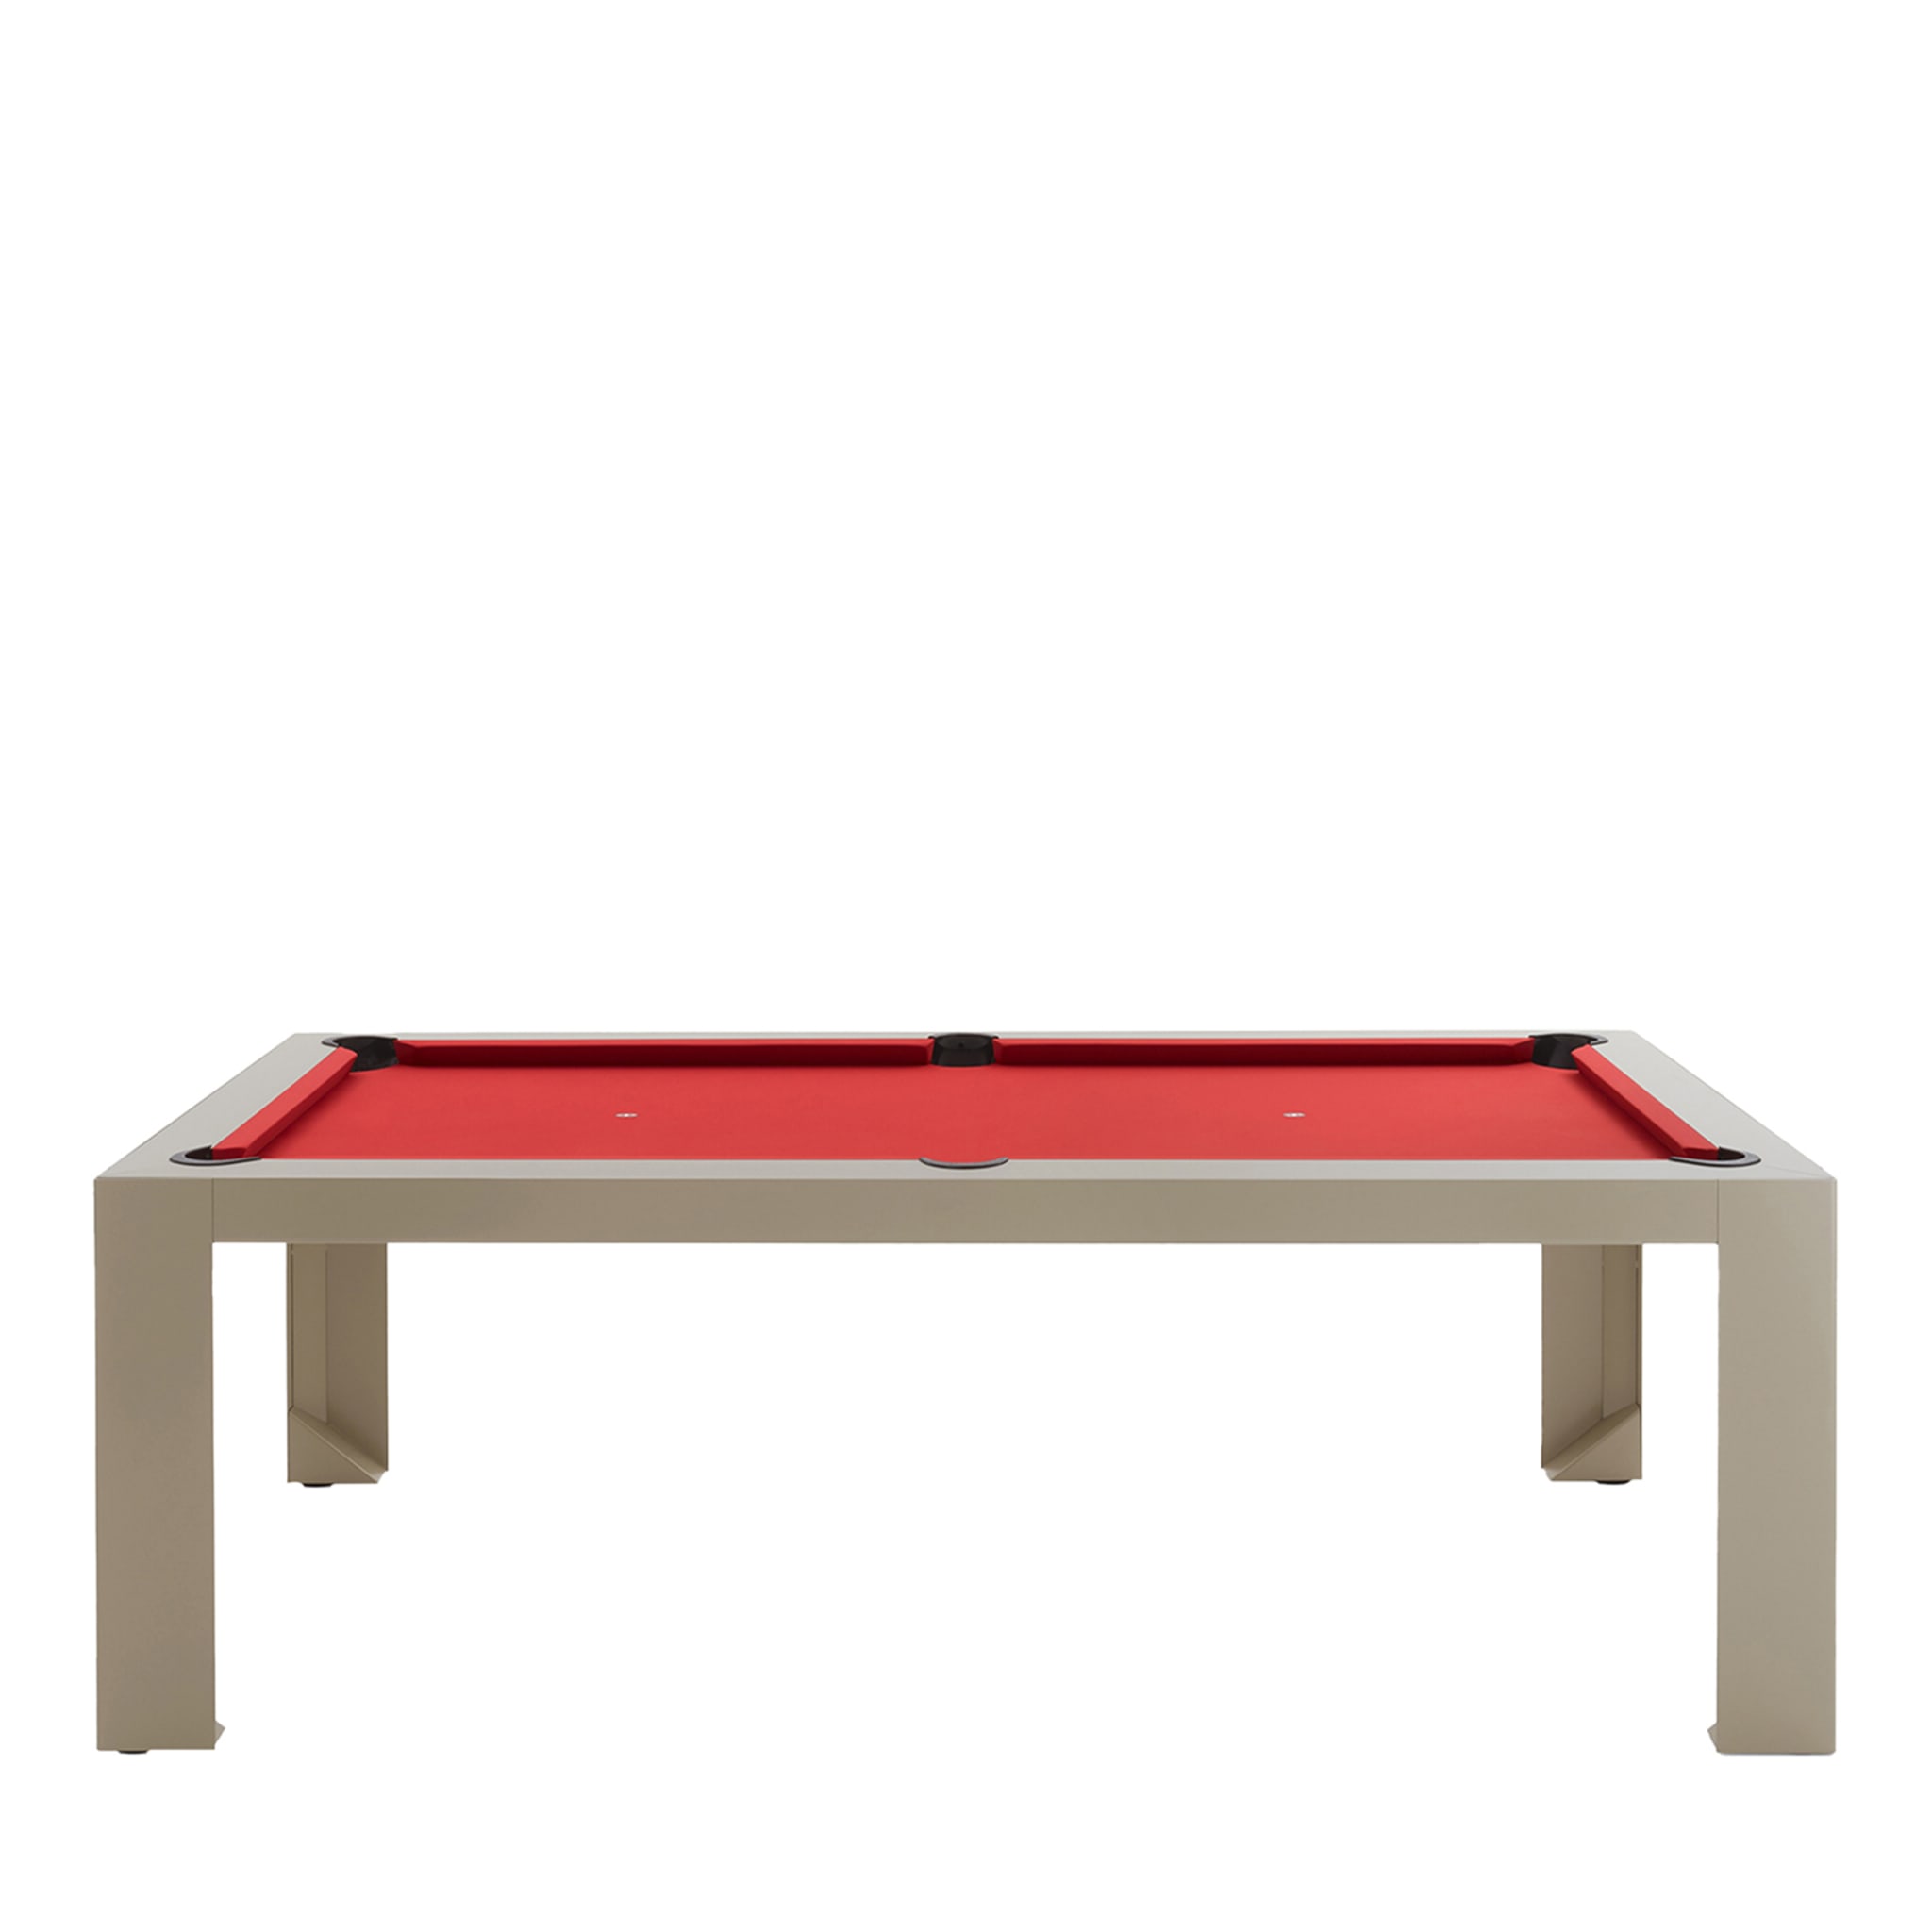 Carambola Cubista 7' Dove Gray Pool Table by Basaglia + Rota Nodari - Main view